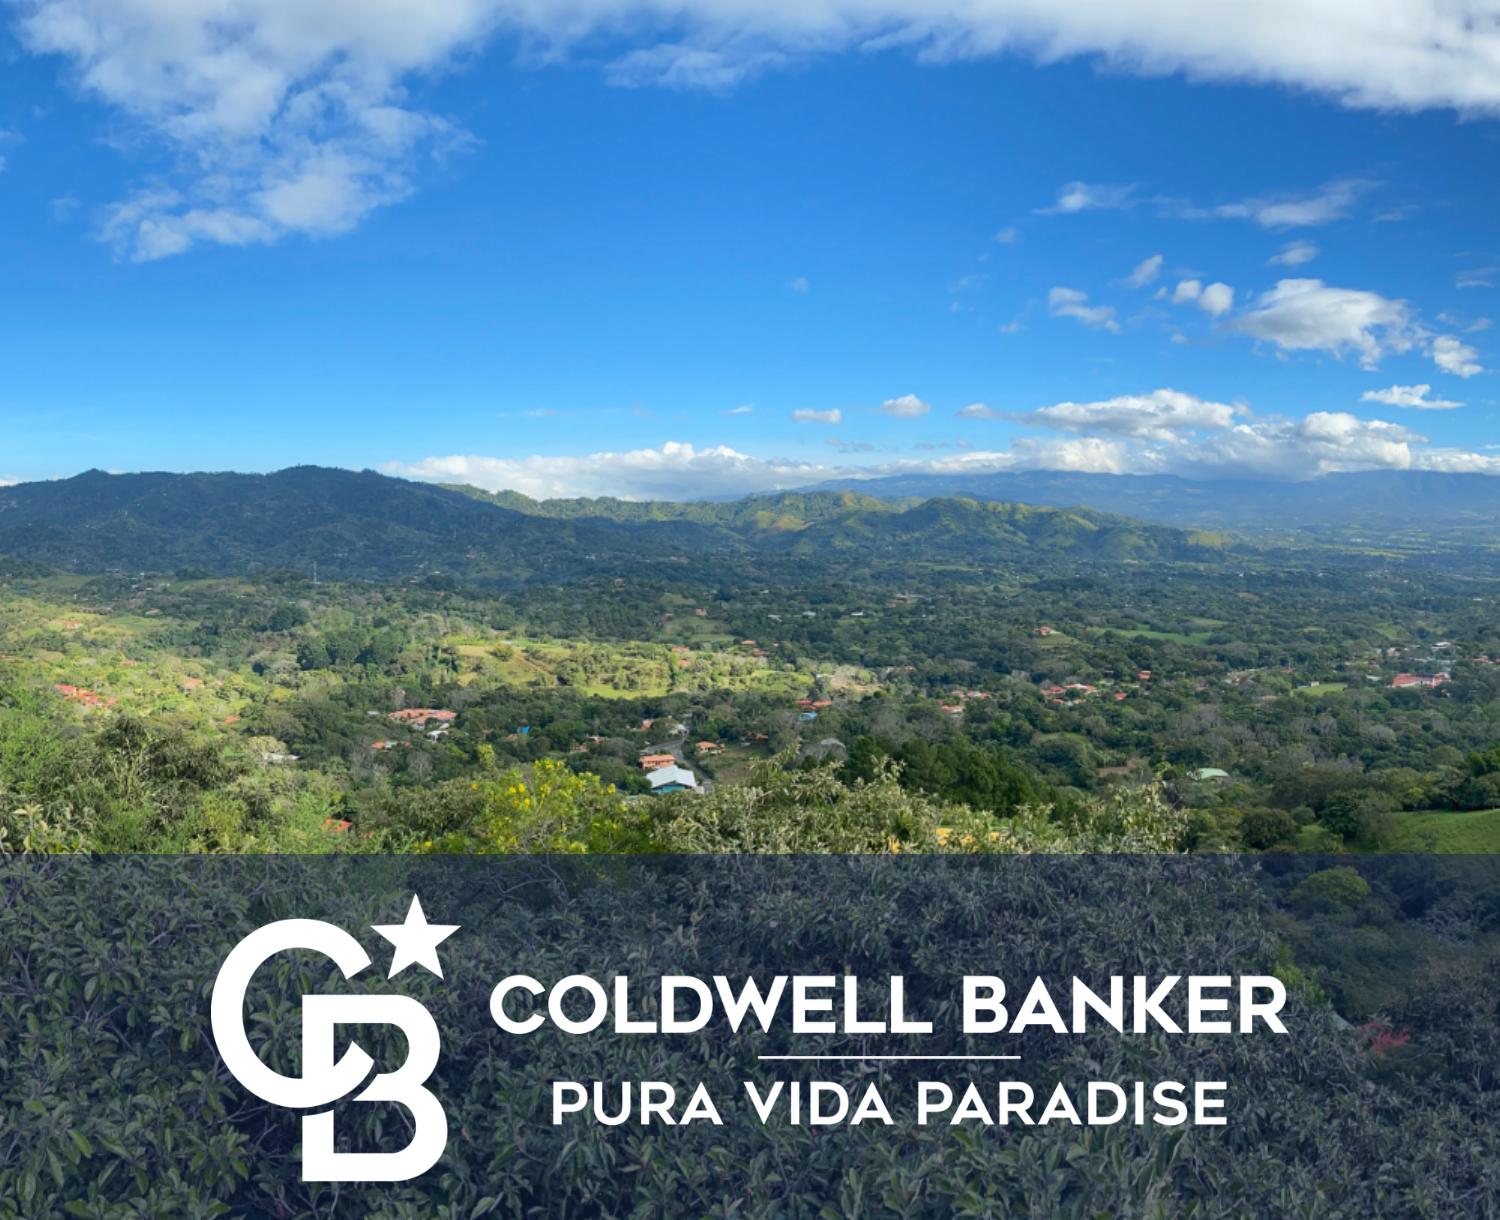 Coldwell Banker Pura Vida Paradise